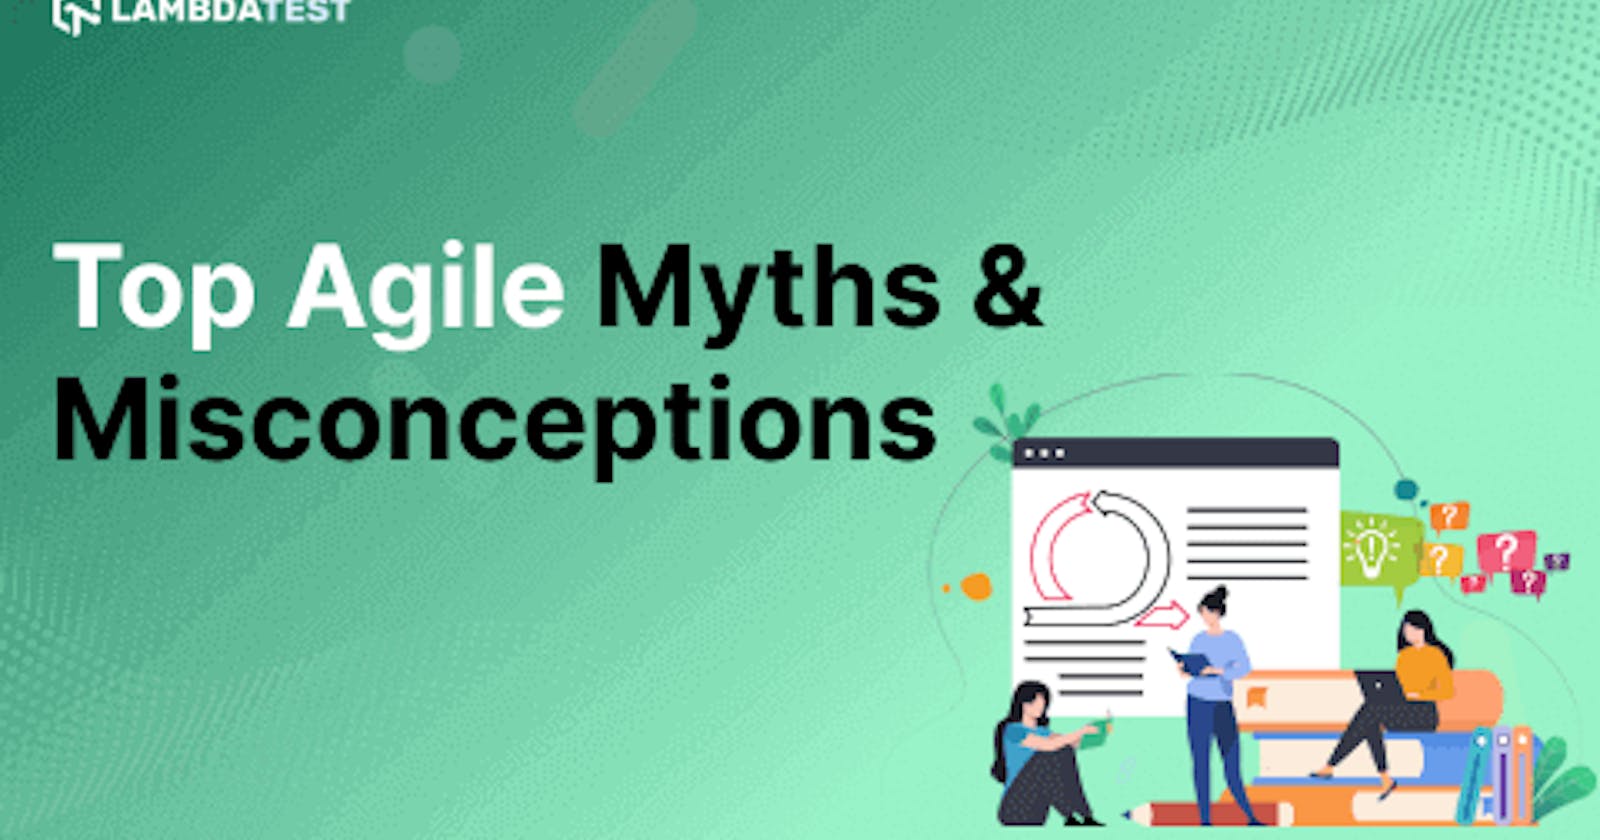 Top Agile Myths & Misconceptions